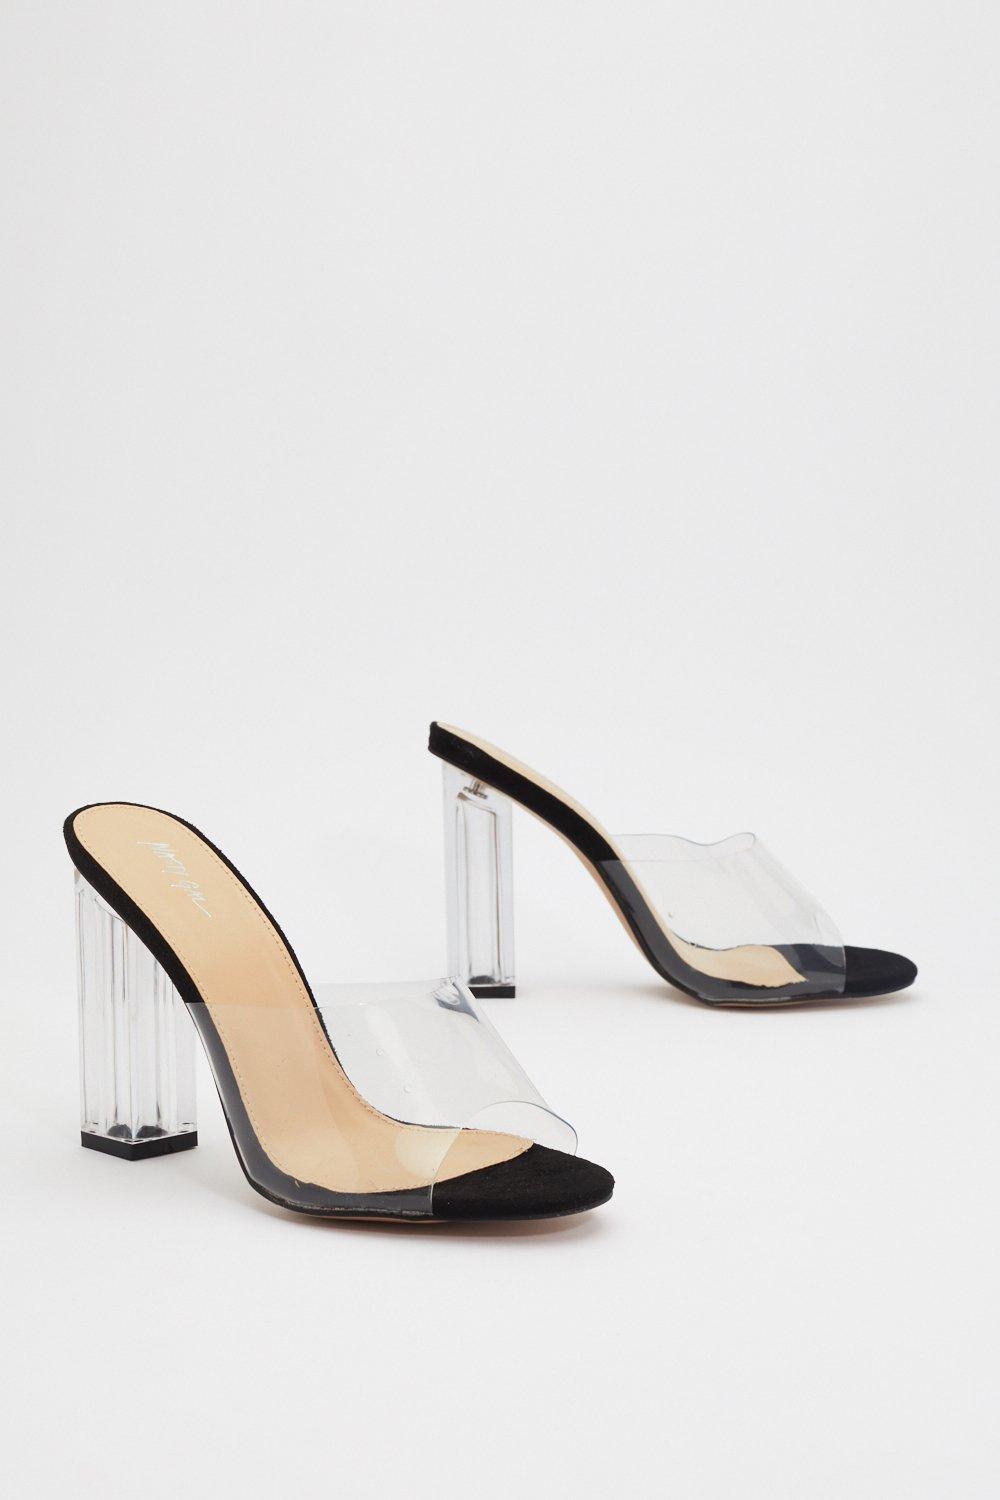 perspex heels size 12